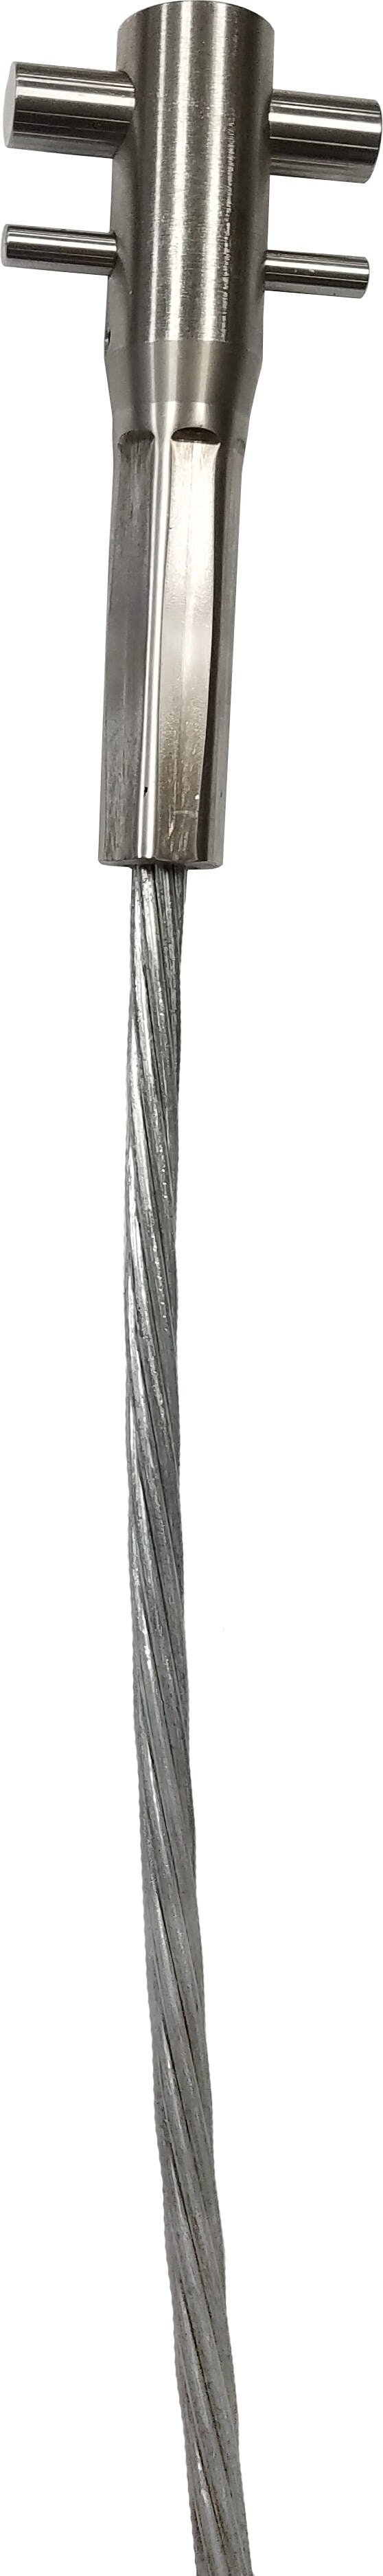 3M™ DBI-SALA® Lad-Saf™ Swaged Cable 6115024, 3/8 Inch, Galvanized Steel, 80 m_0